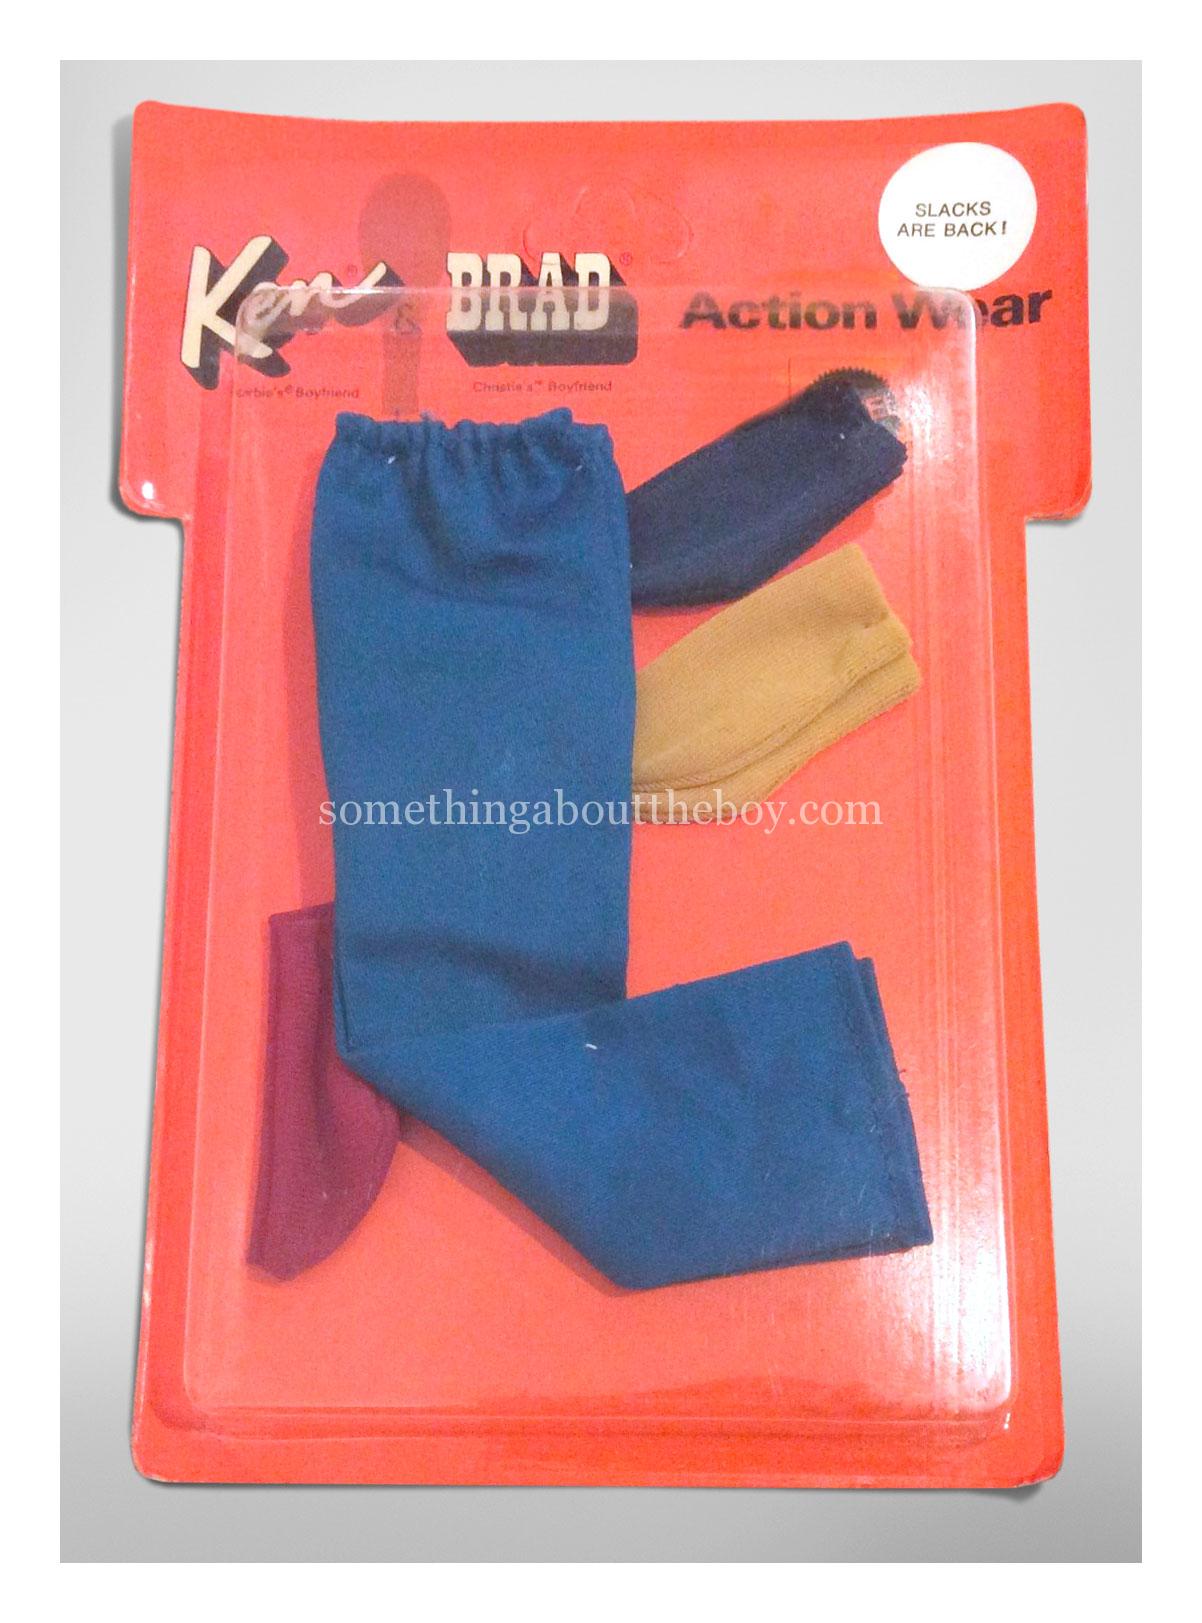 1971 Action Wear Slacks Are Back! in original packaging